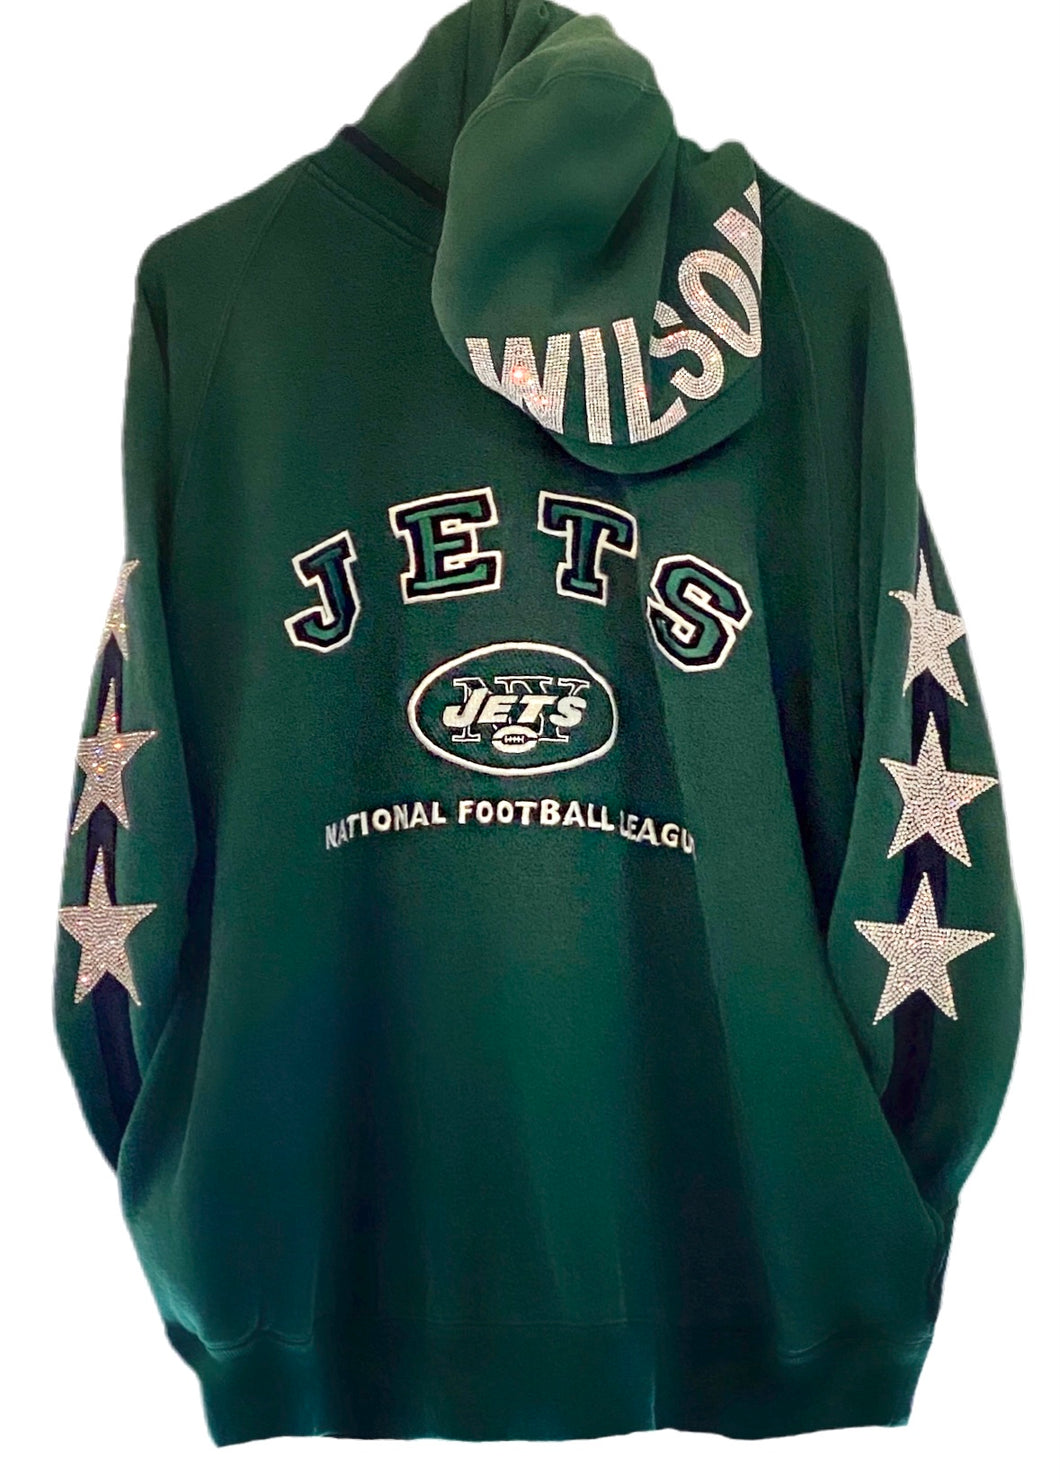 NY Jets, NFL One of a KIND Vintage Hoodie with Three Crystal Star Design - Custom Crystal Name on Hoodie